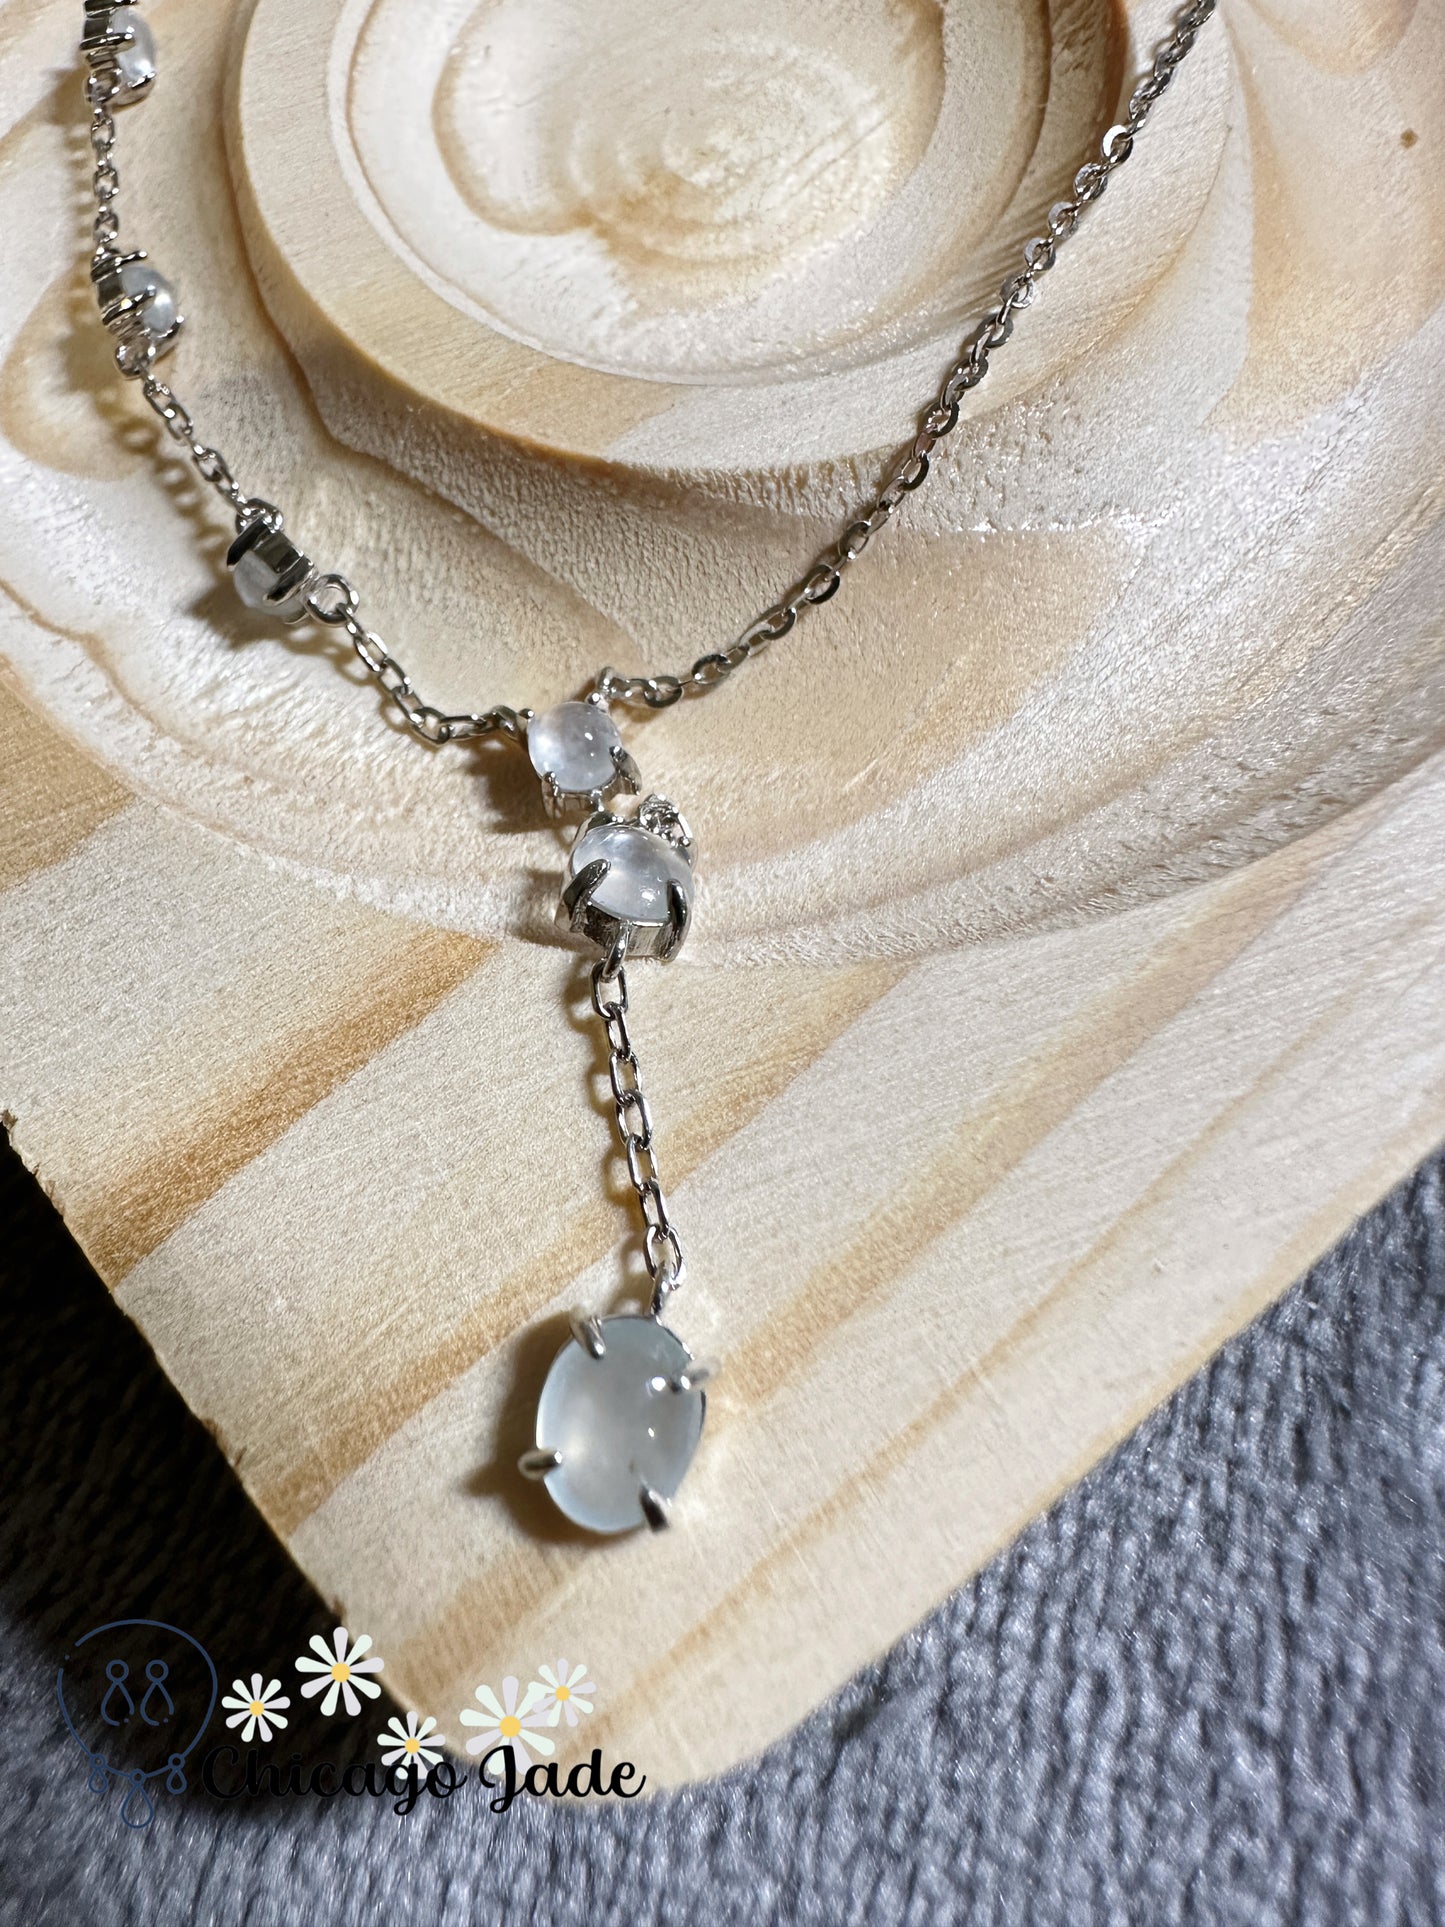 Designer jadeite jade necklace with asymmetry design sterling silver s925